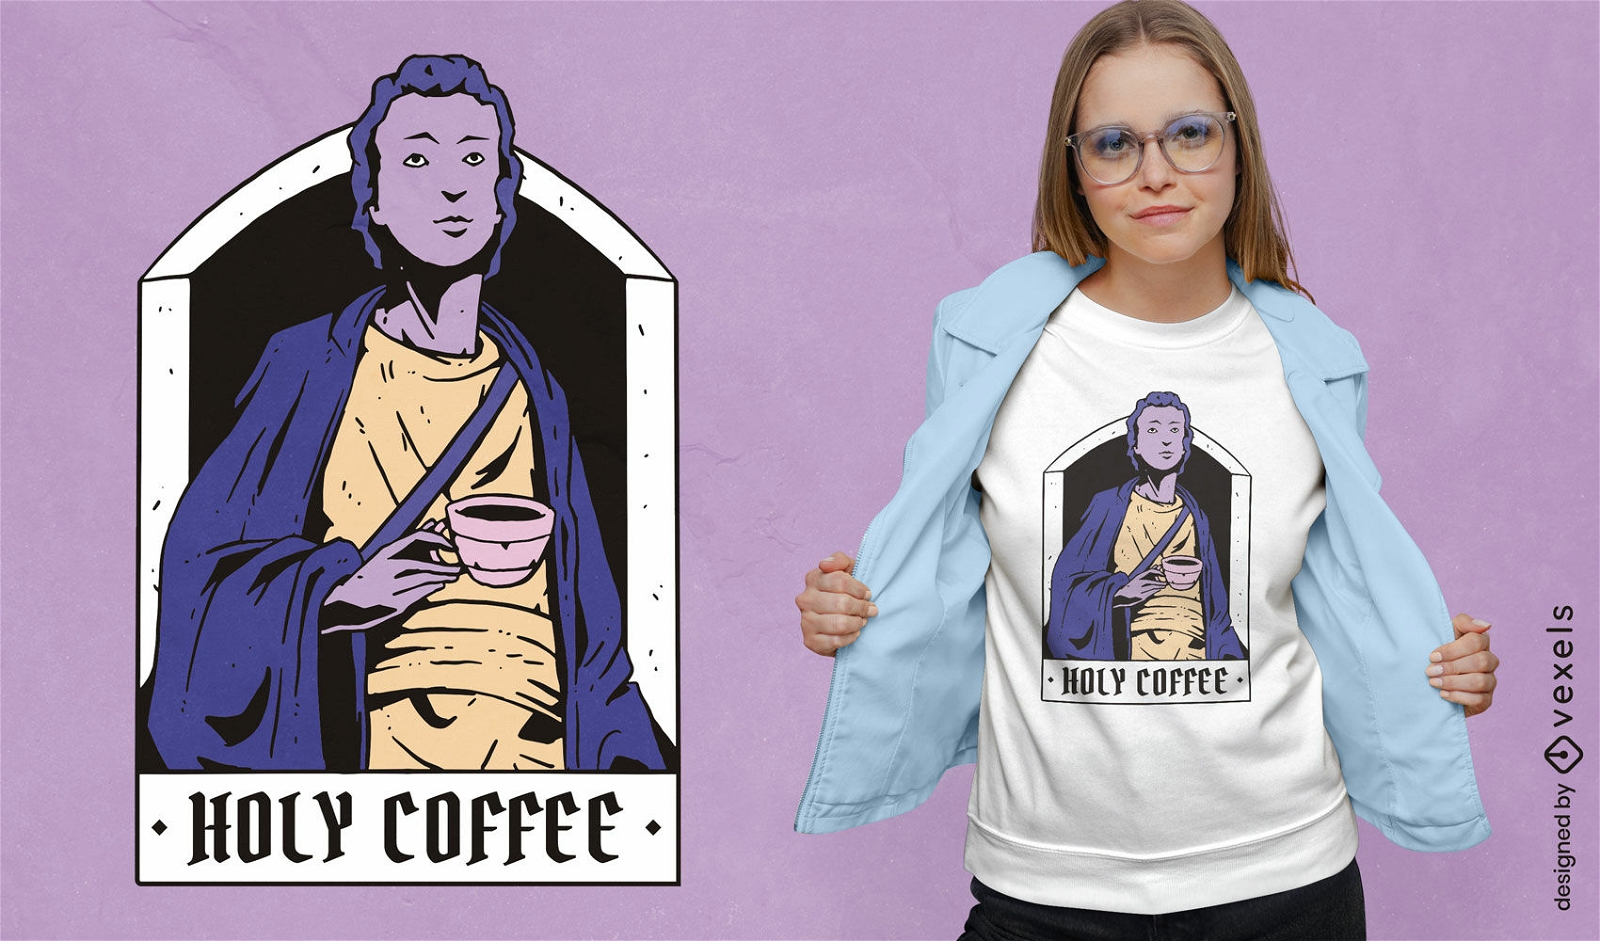 Holy coffee saint t-shirt design